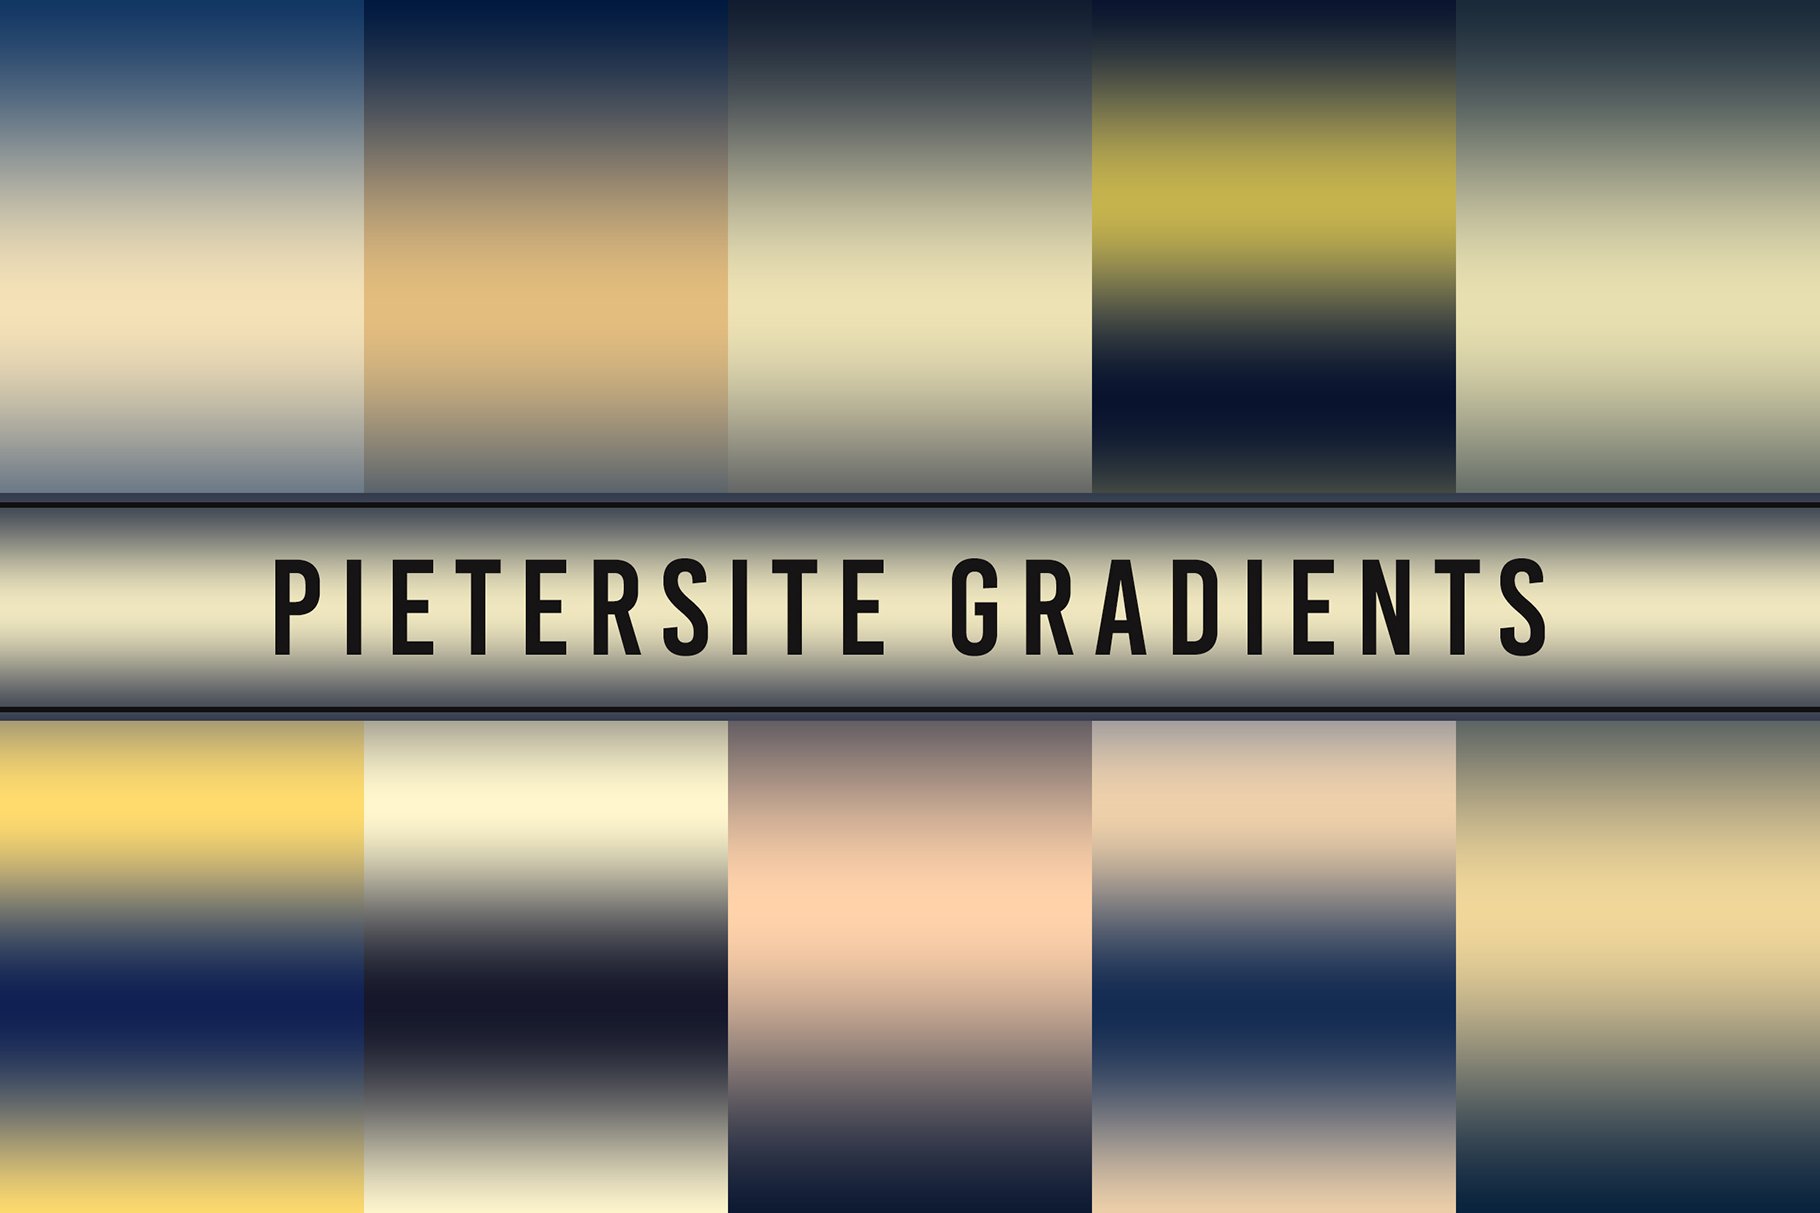 Pietersite Gradients cover image.